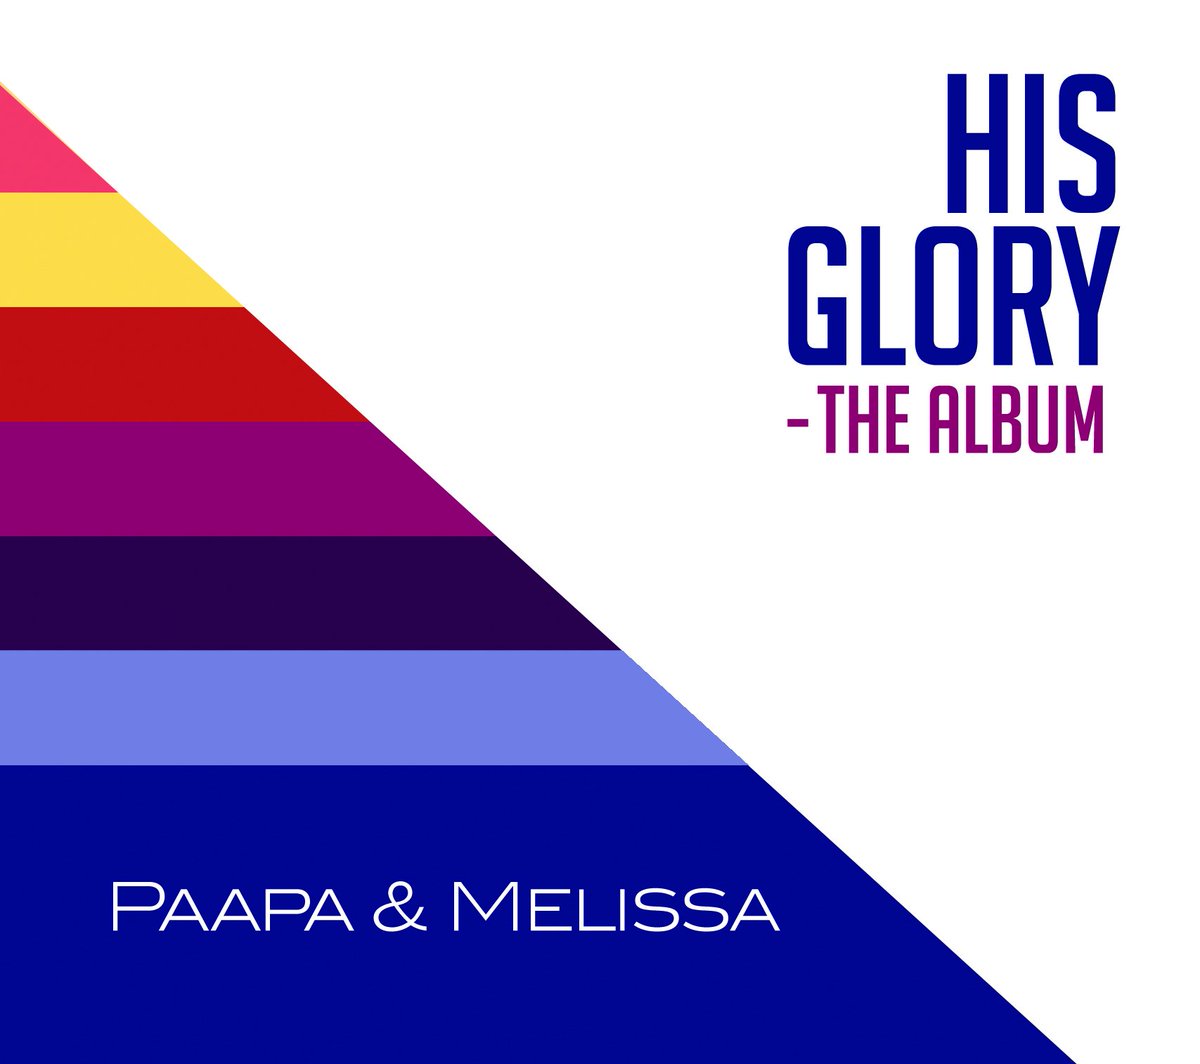 Paapa & Melissa - His Glory